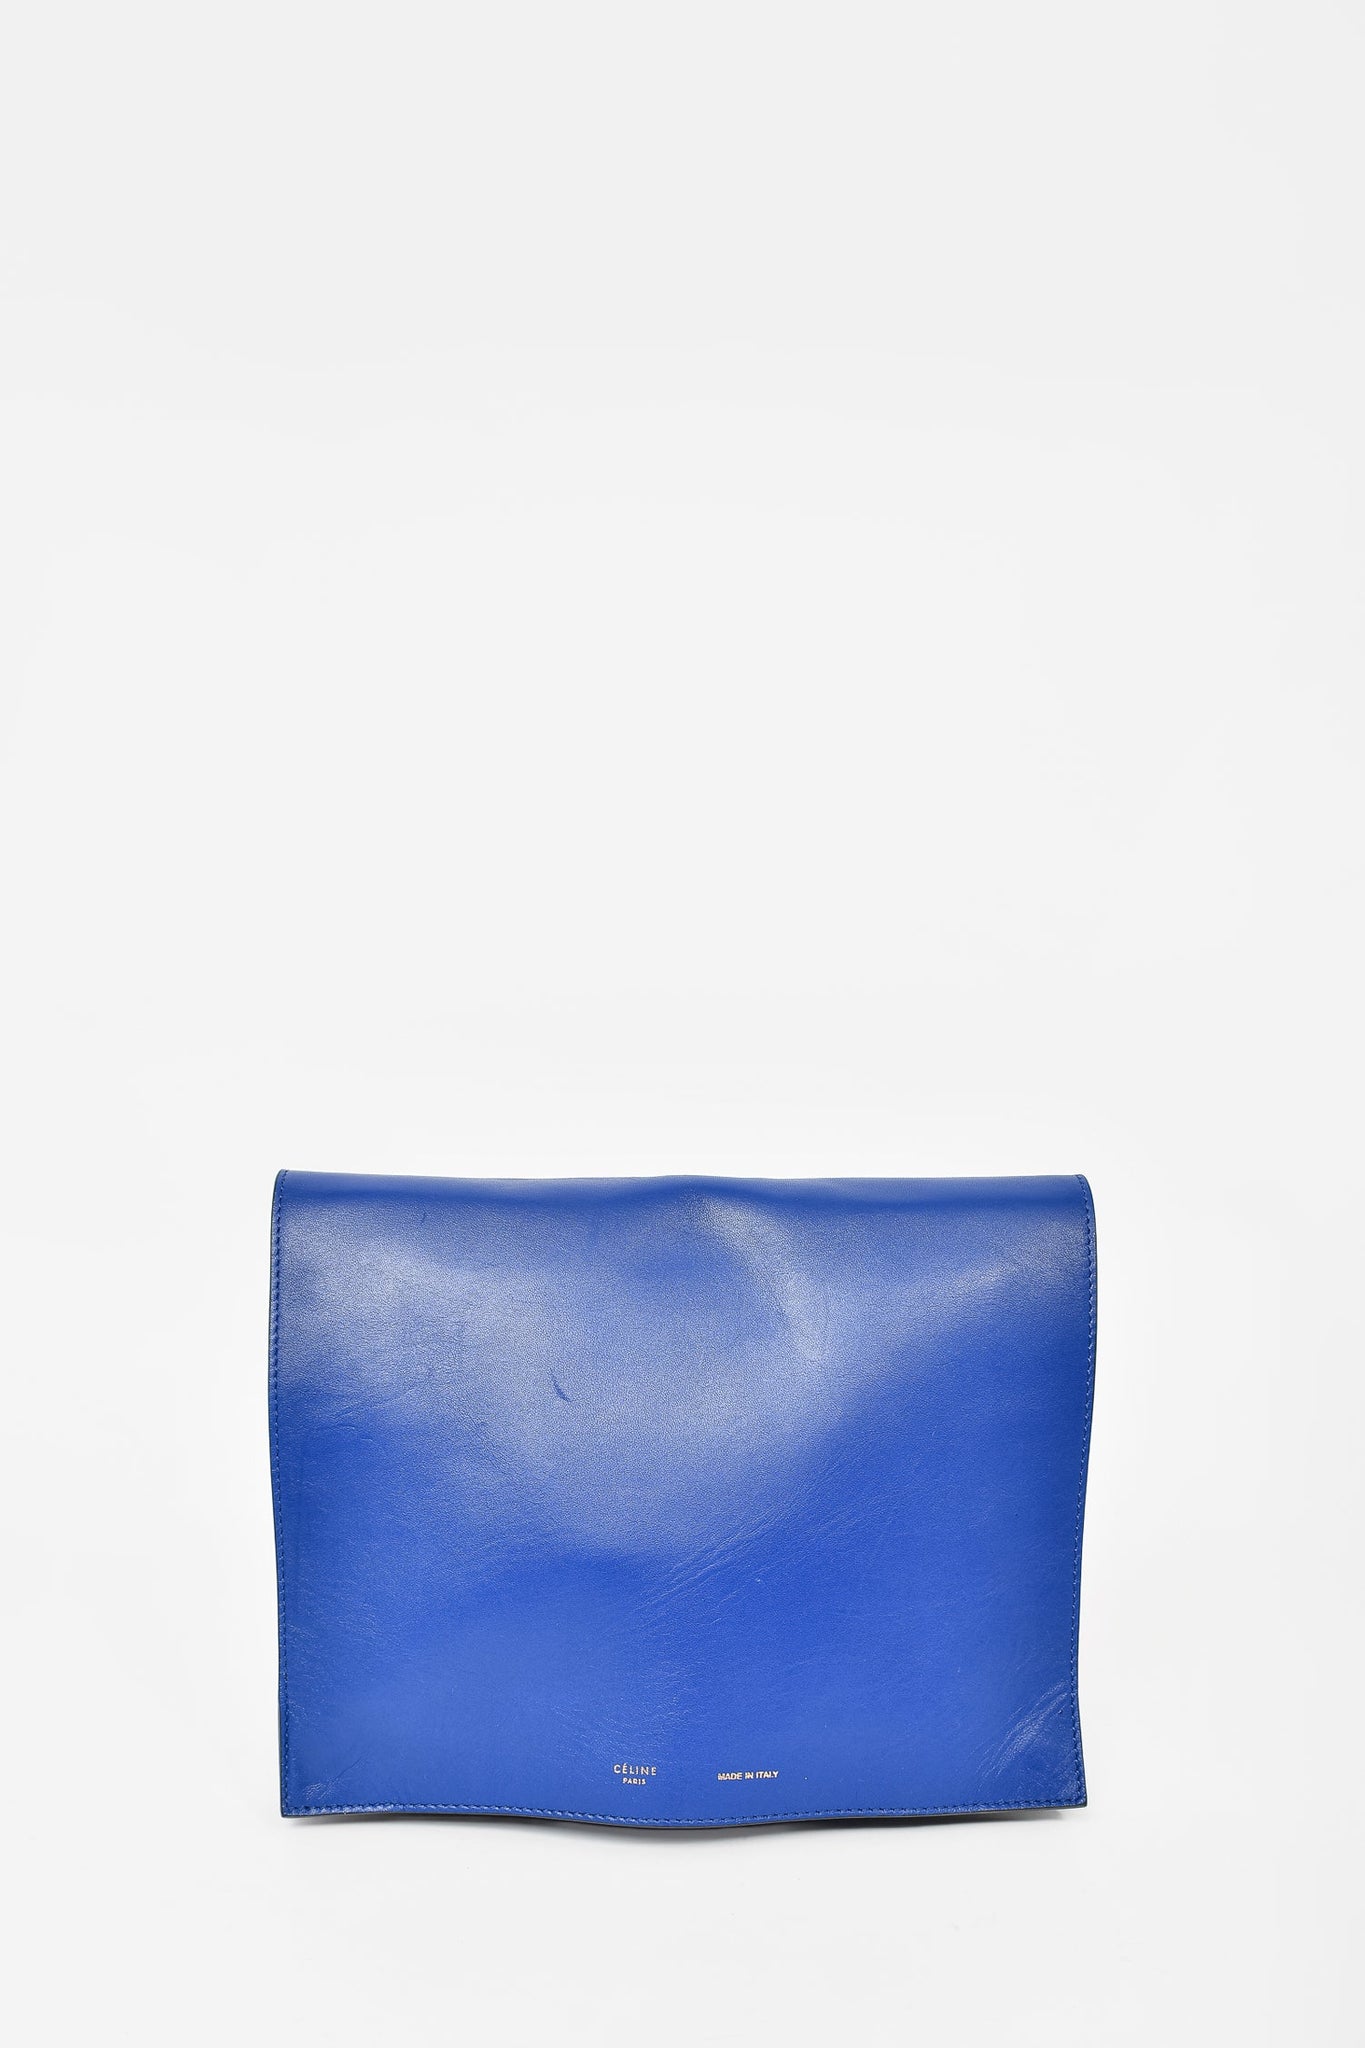 Celine Blue Leather Large Rectangle Clutch